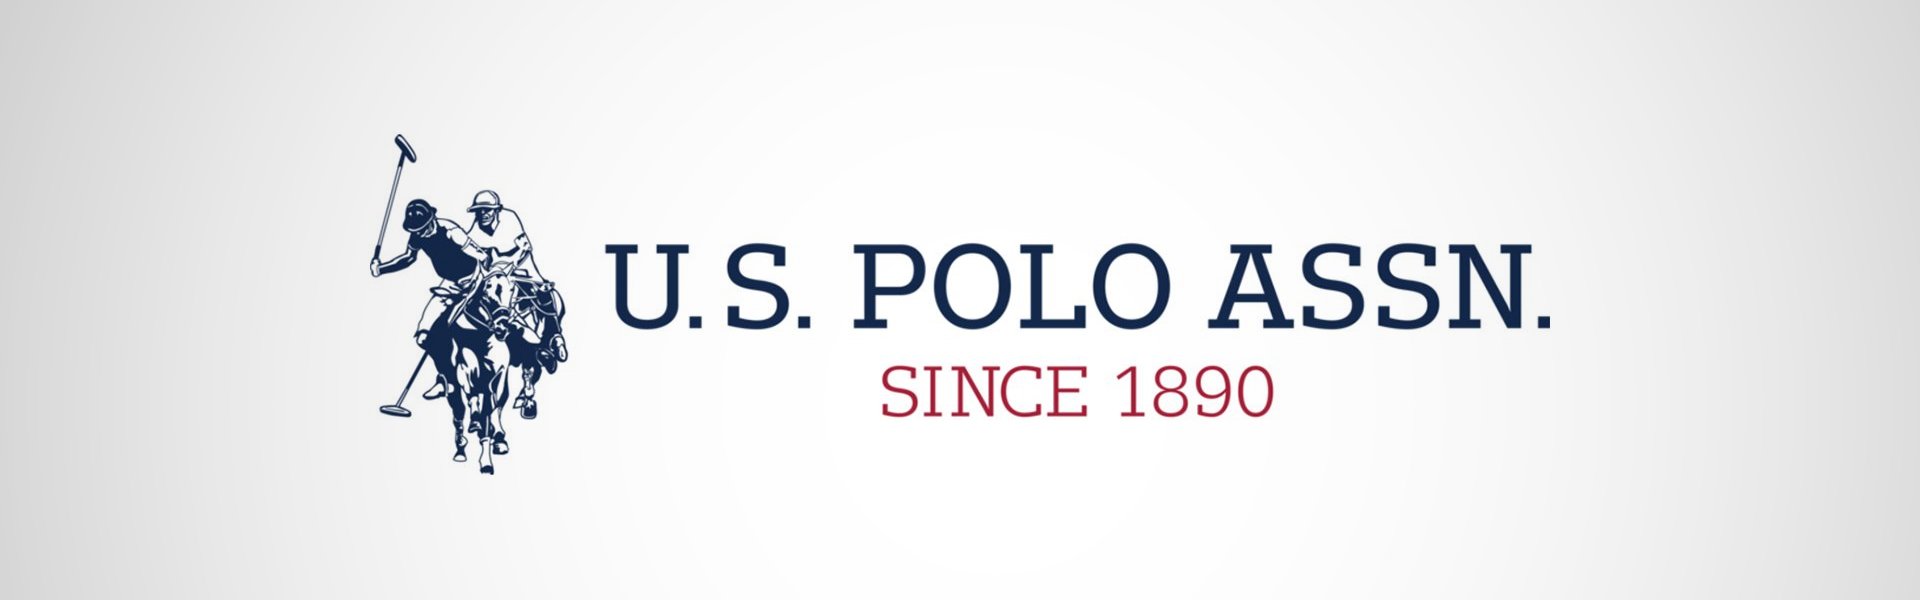 U.S. Polo miesten kengät Tabry, harmaa U. S. Polo Assn.